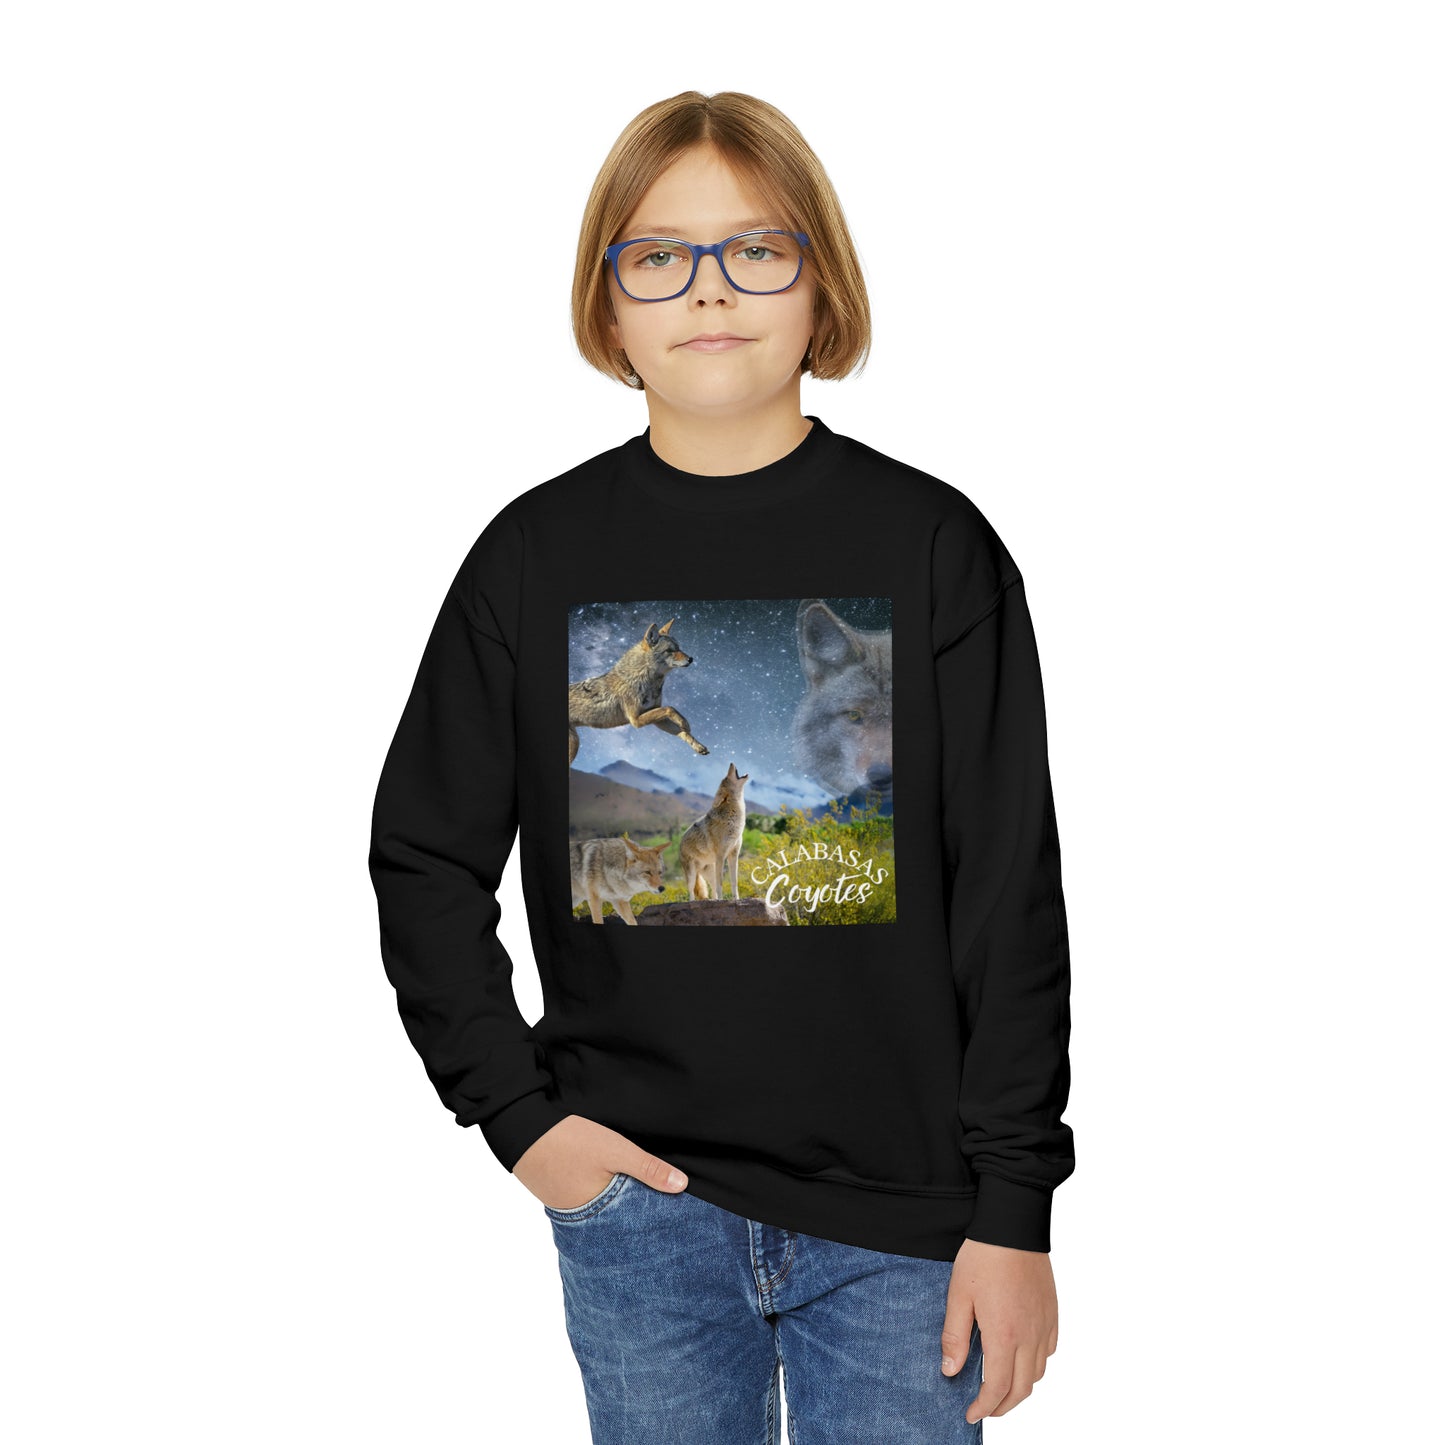 Calabasas Kid's Sweatshirt Wild